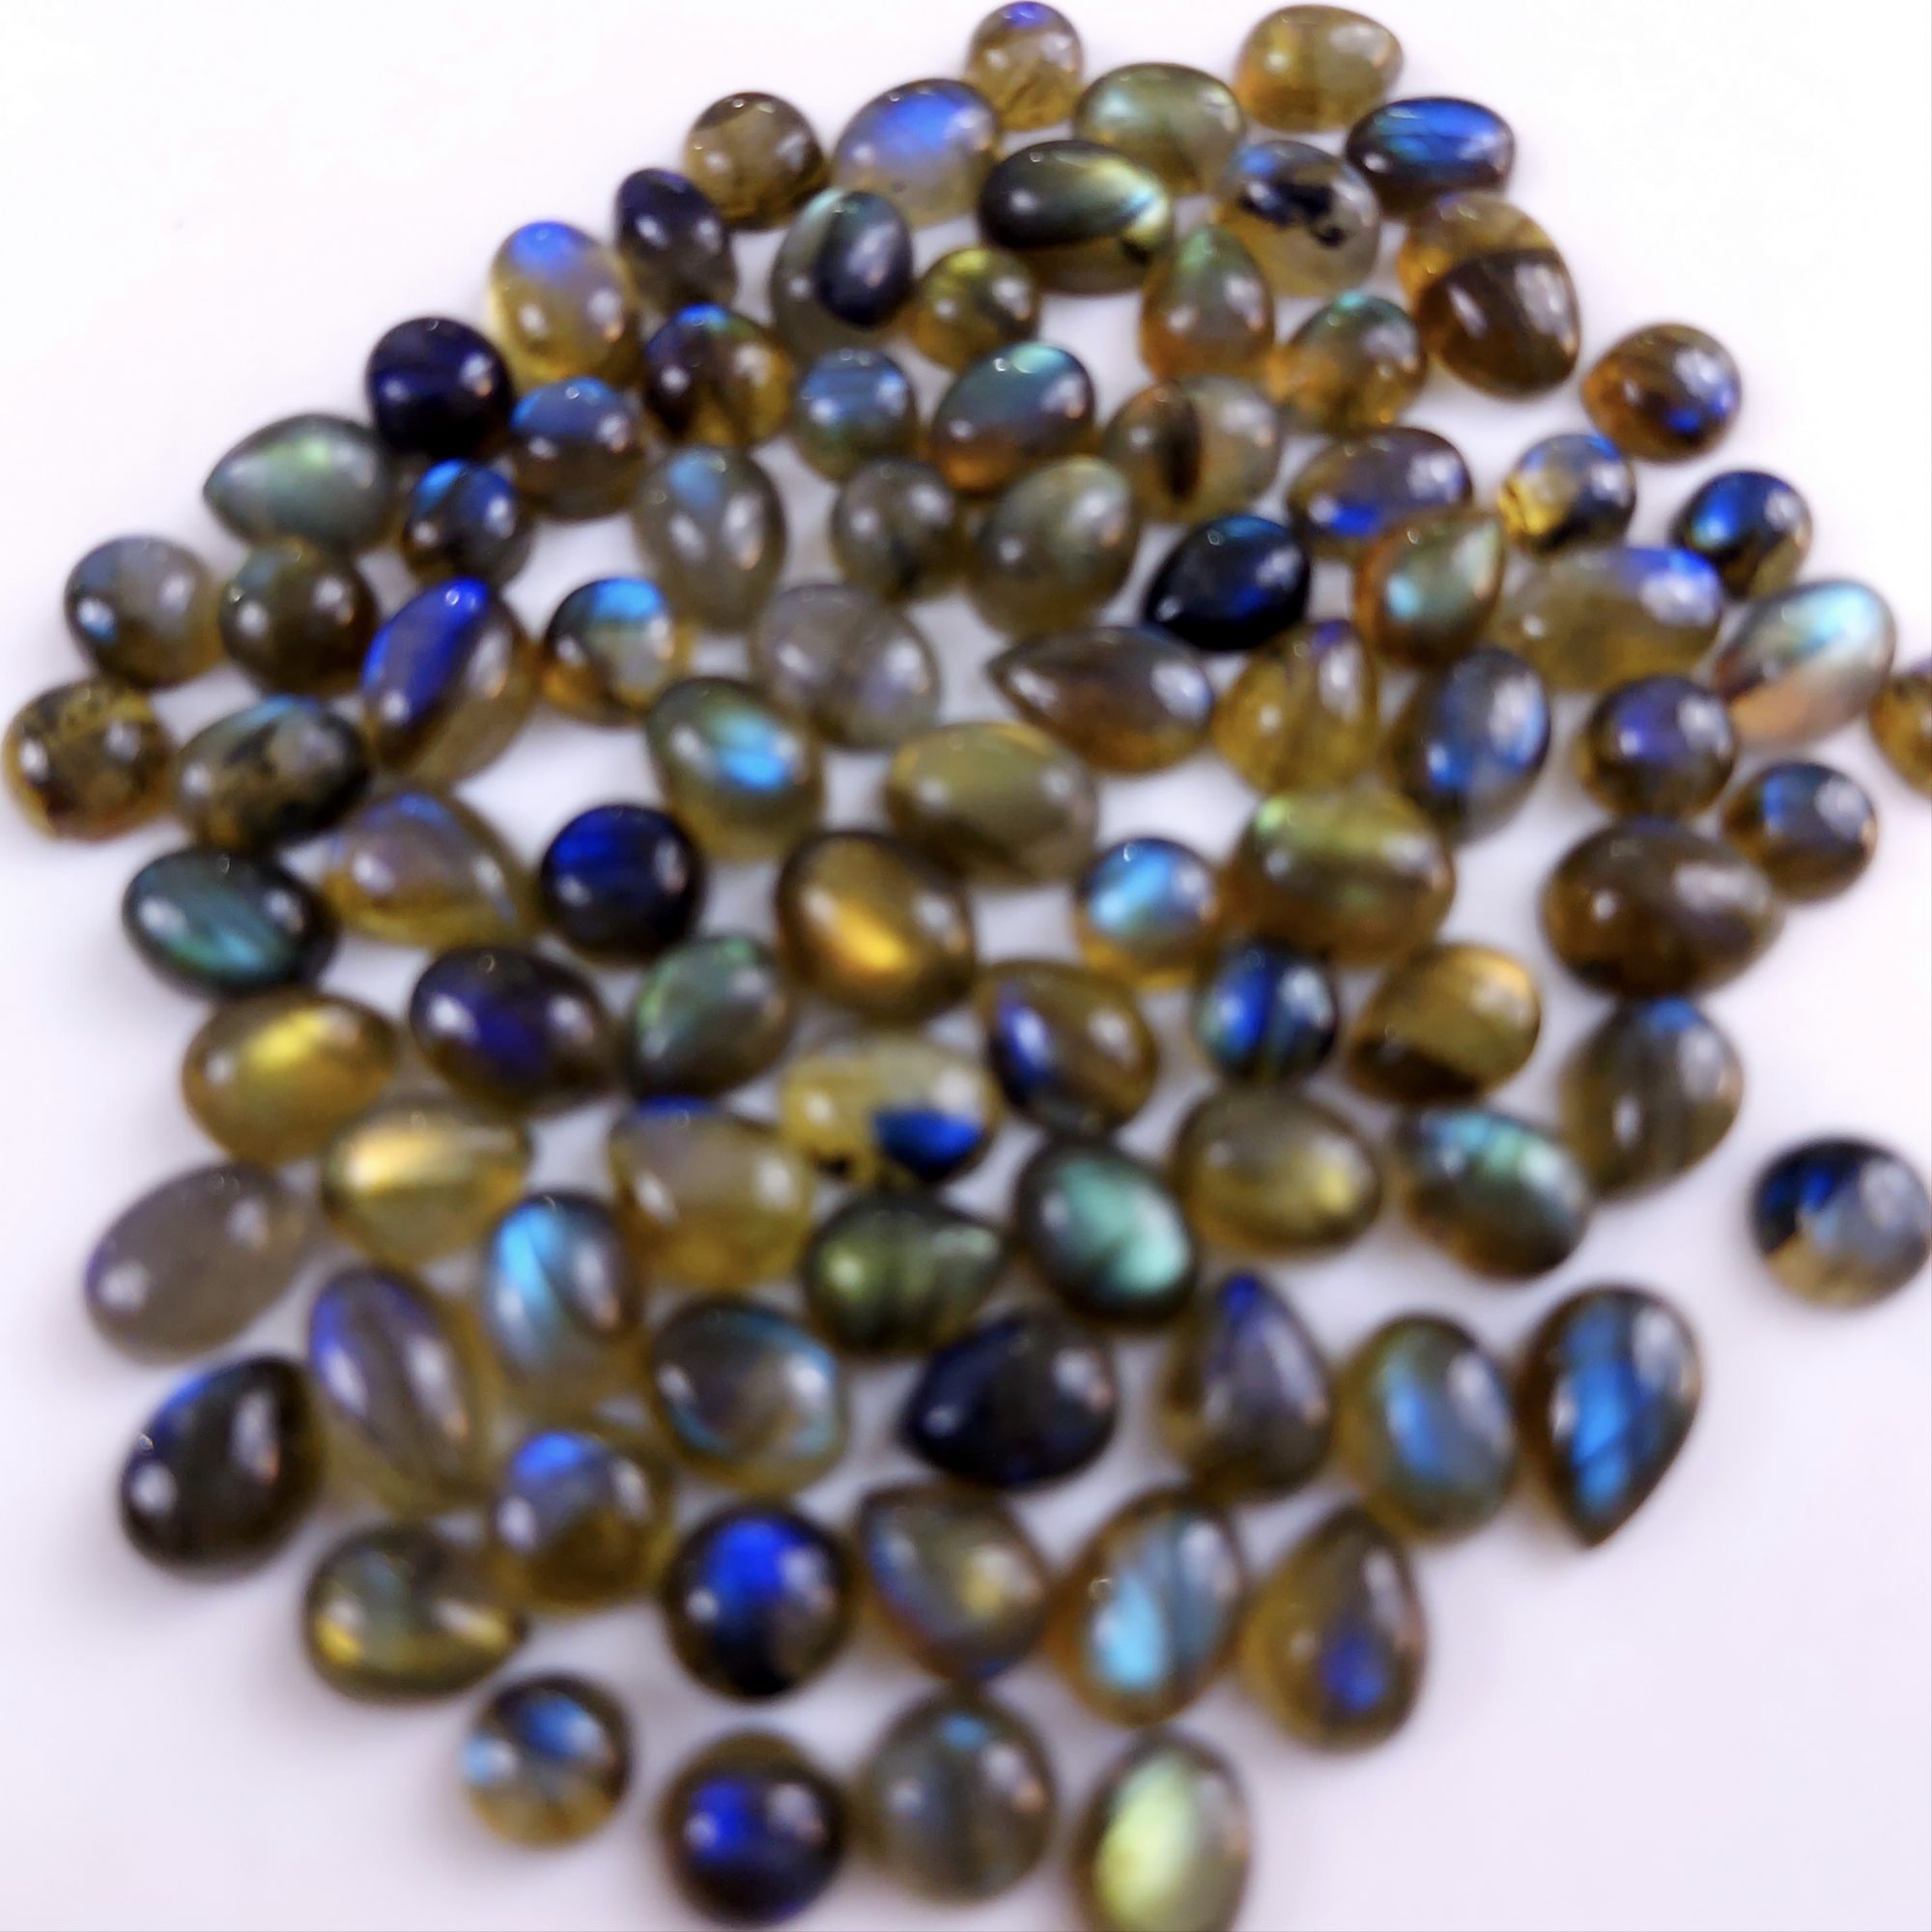 90 Pcs142Cts Natural Multifire Labradorite Loose Cabochon Gemstone Lot for Jewelry Making  7x5 3x3mm#1069